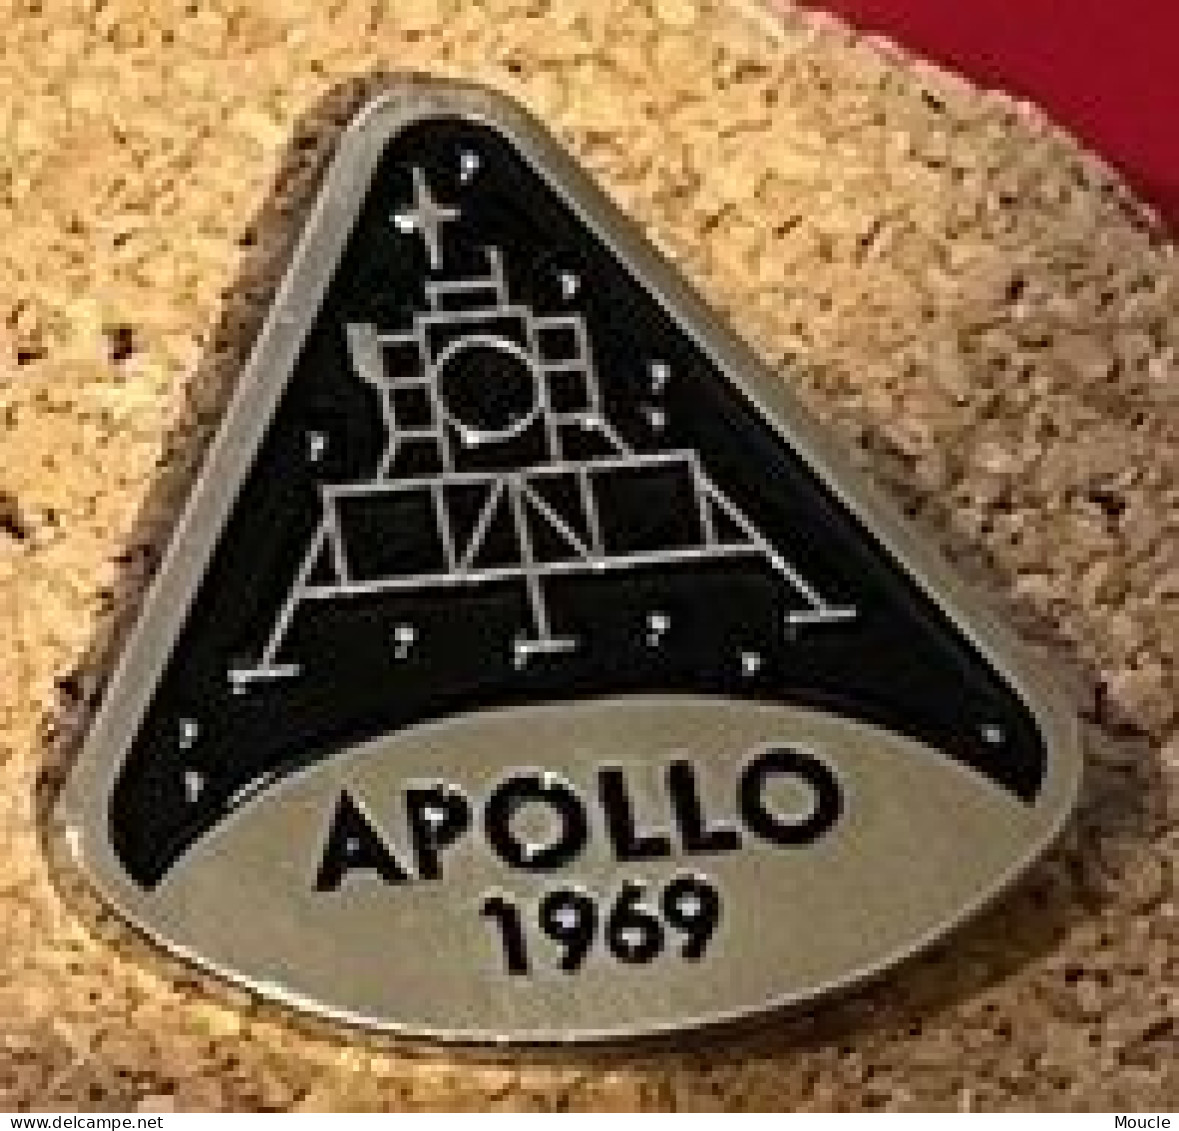 APOLLO 1969 - NASA - ESPACE - SPACE - MODULE - FUSEE -  (30) - Spazio